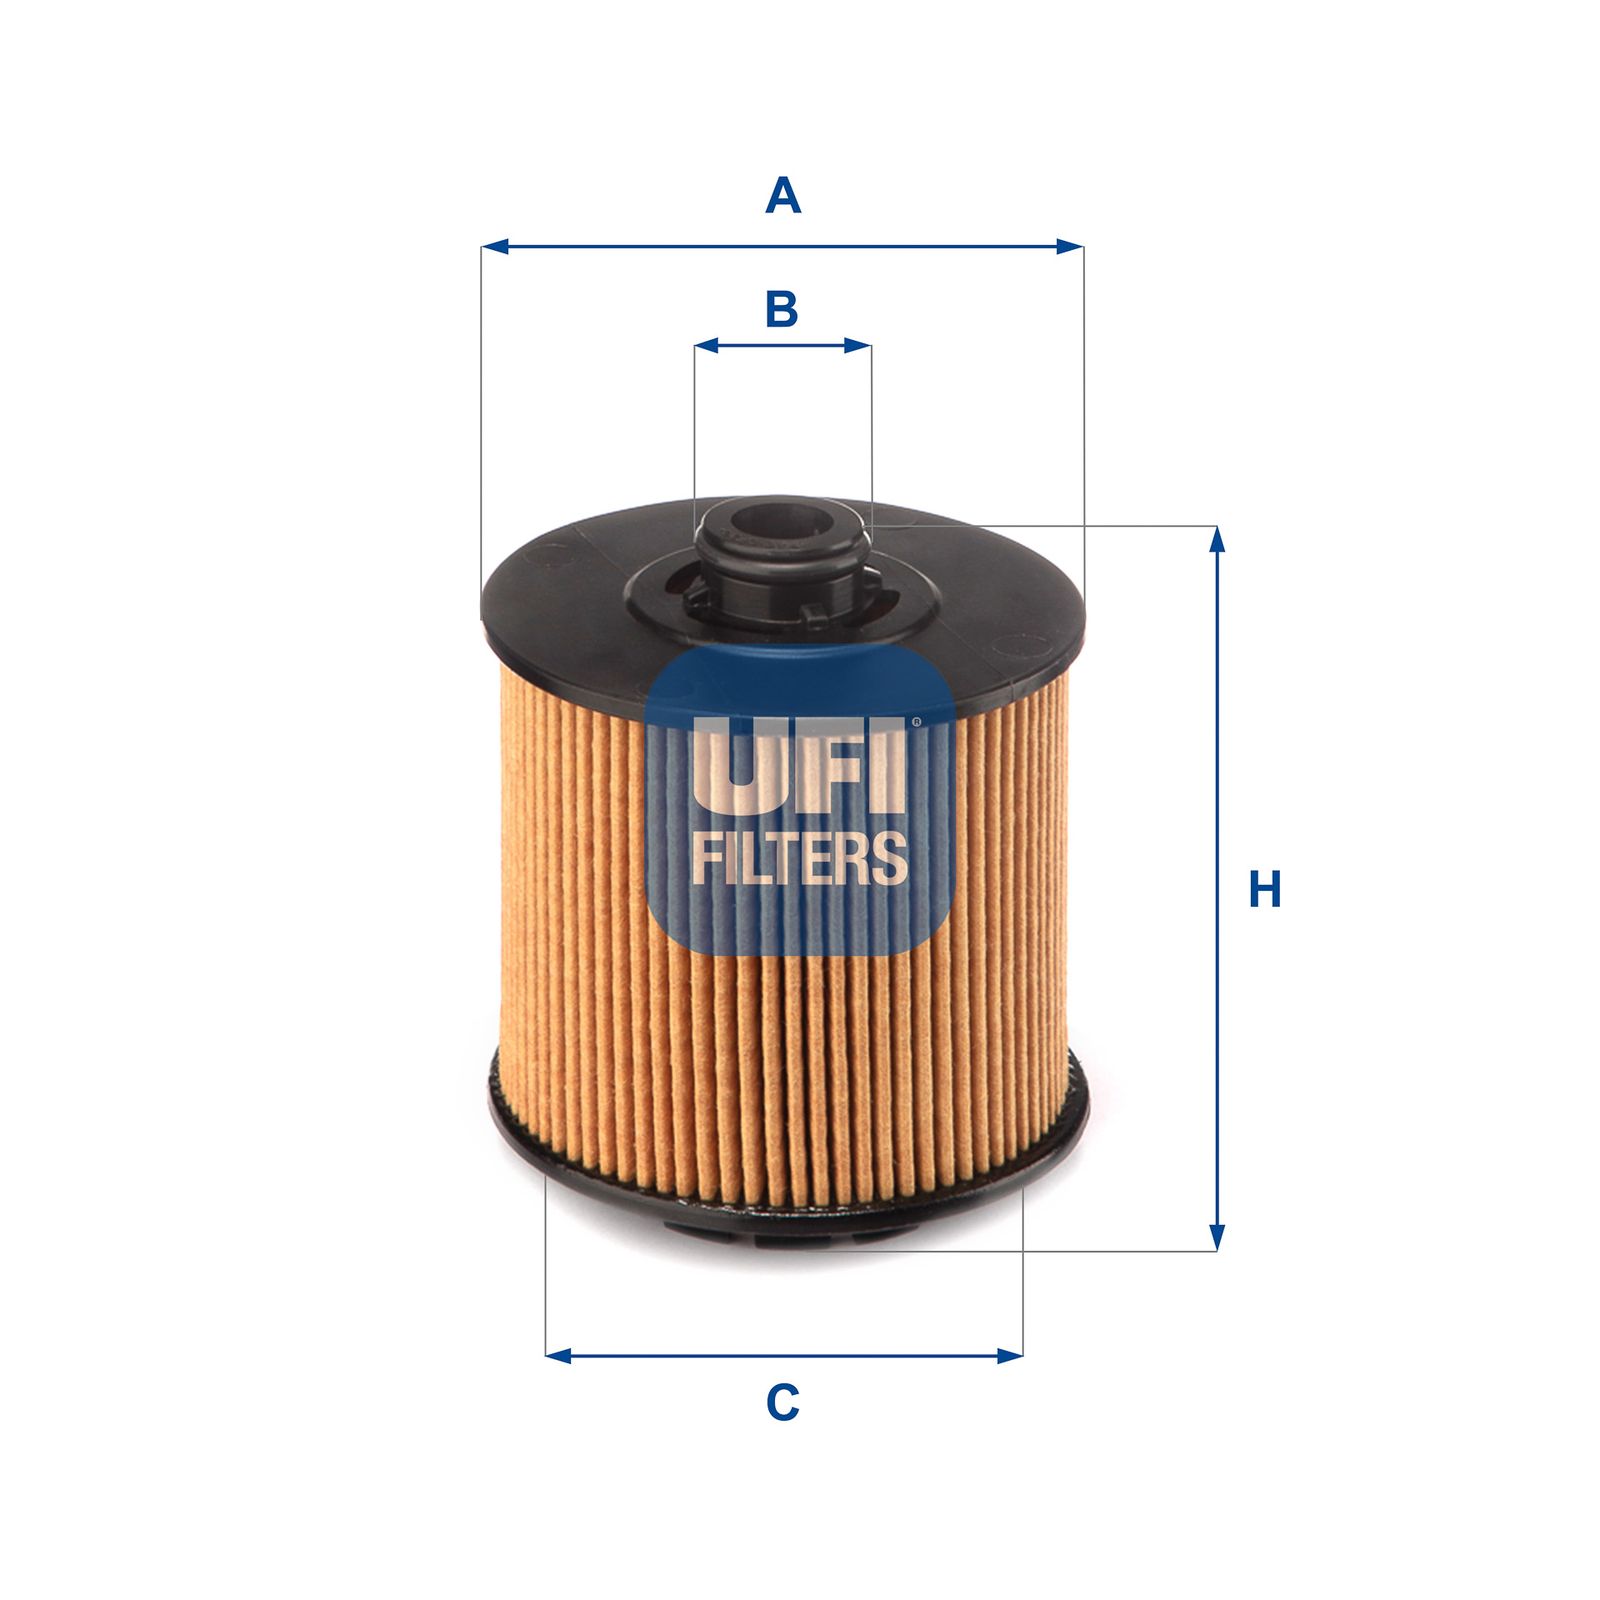 Olejový filtr UFI 25.173.01